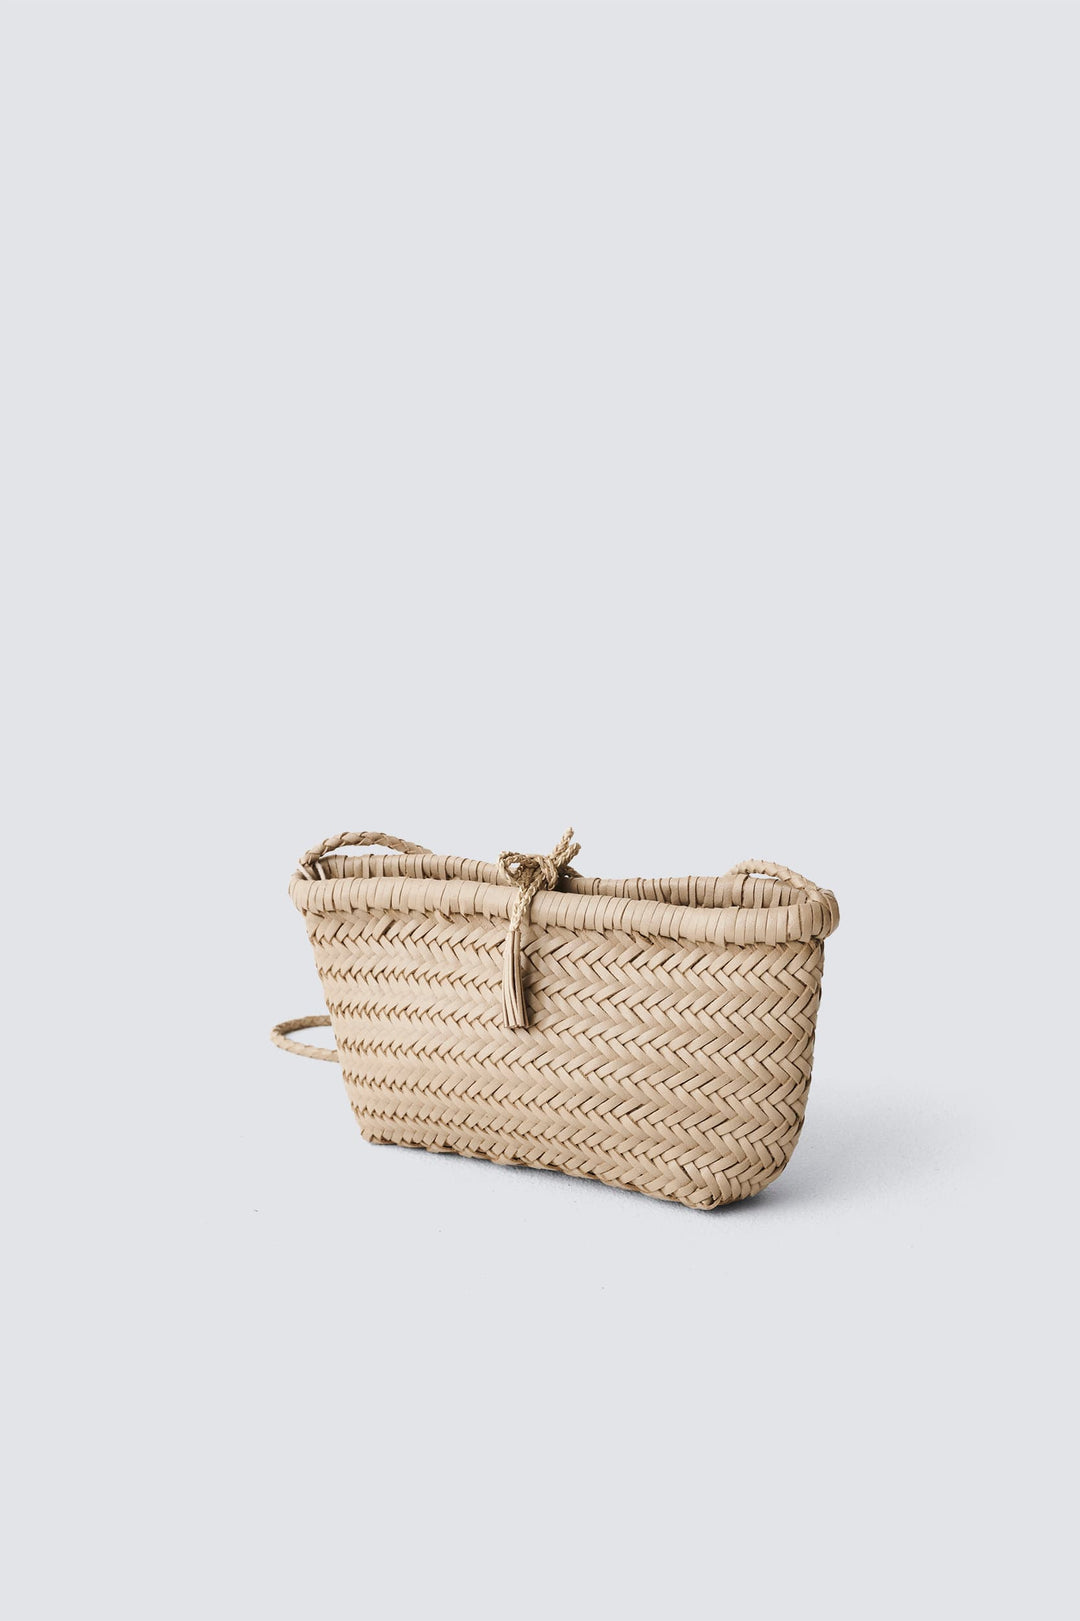 Dragon Diffusion woven leather bag handmade - Minsu Bag Pearl